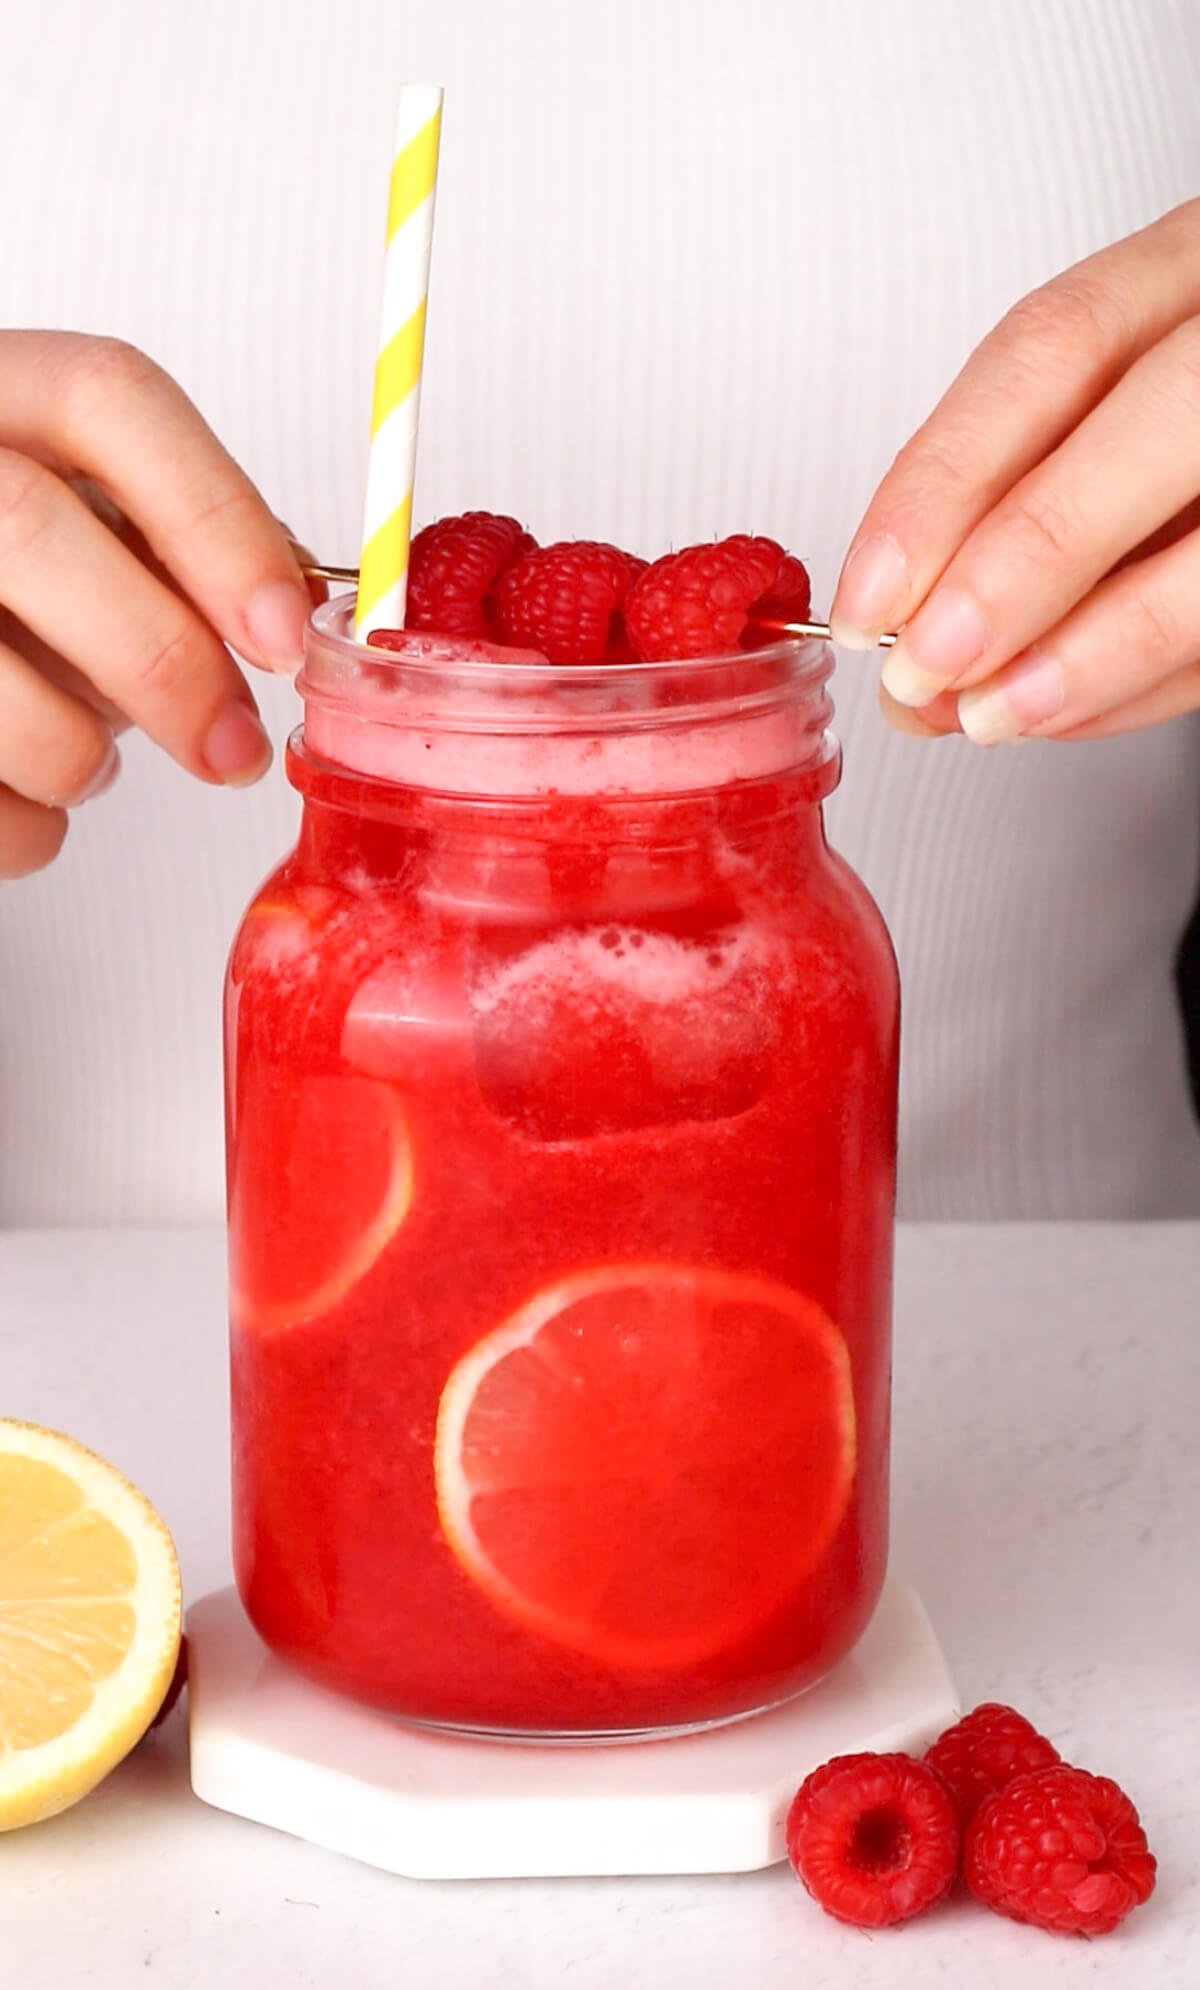 garnishing lemonade with 3 fresh raspberries on a cocktail pick.